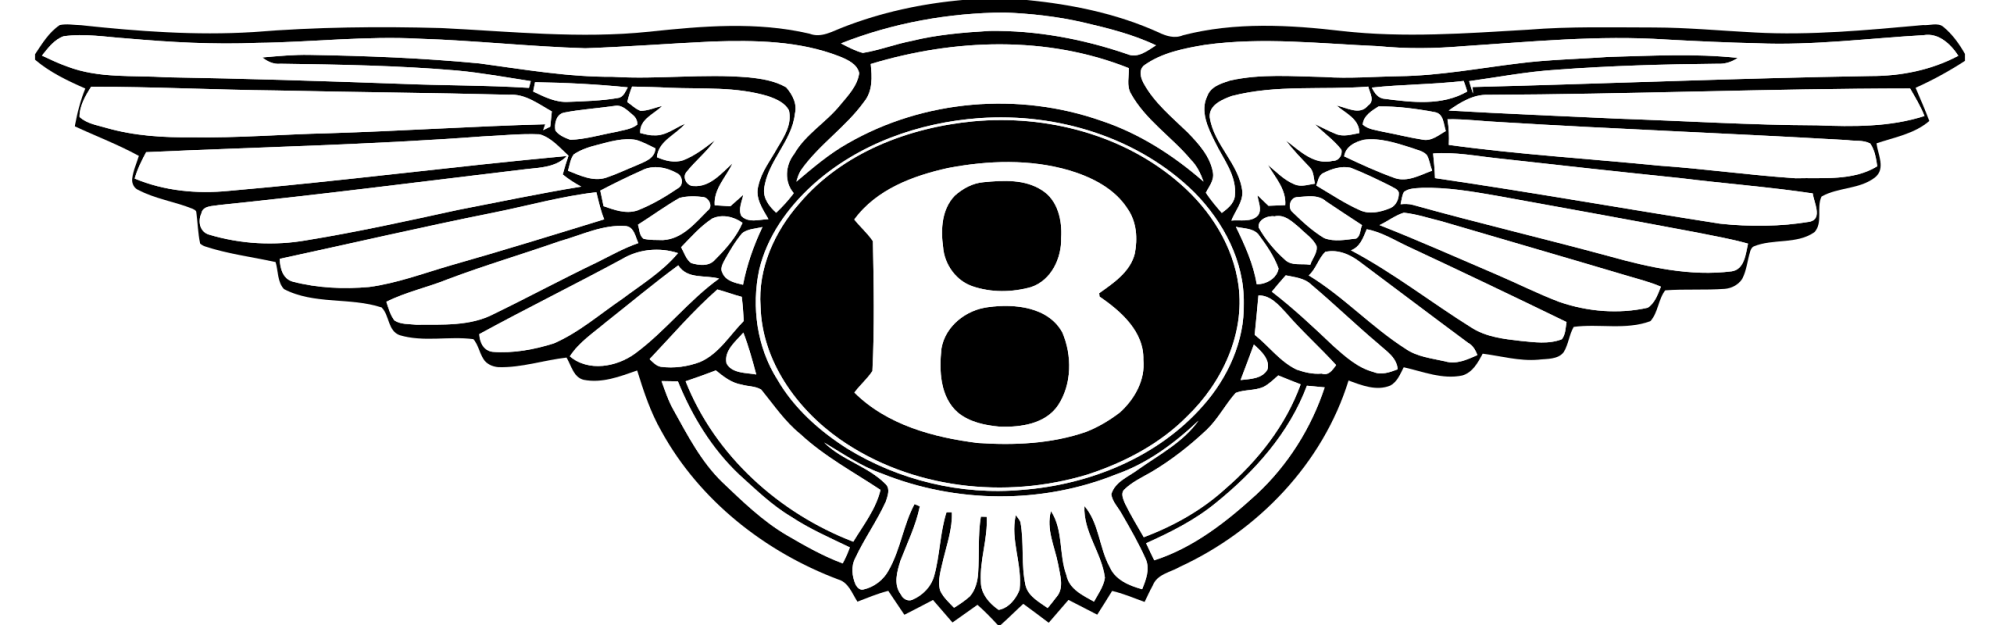 2560px-Bentley_logo_2.svg.png